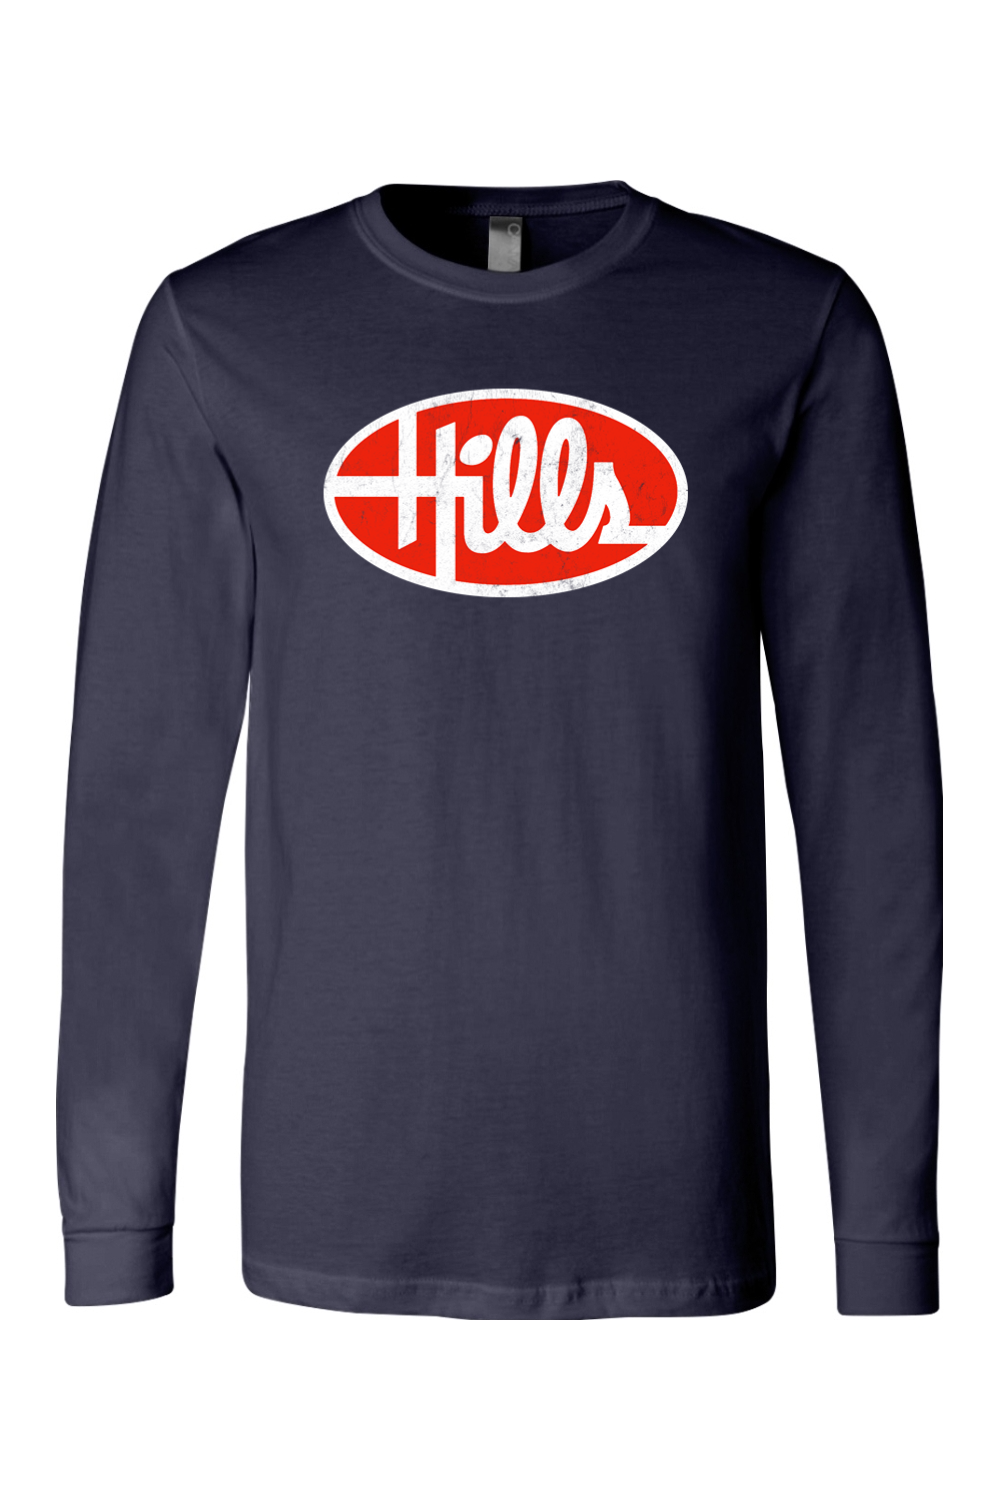 Hills Retro Logo - Long Sleeve Tee - Yinzylvania